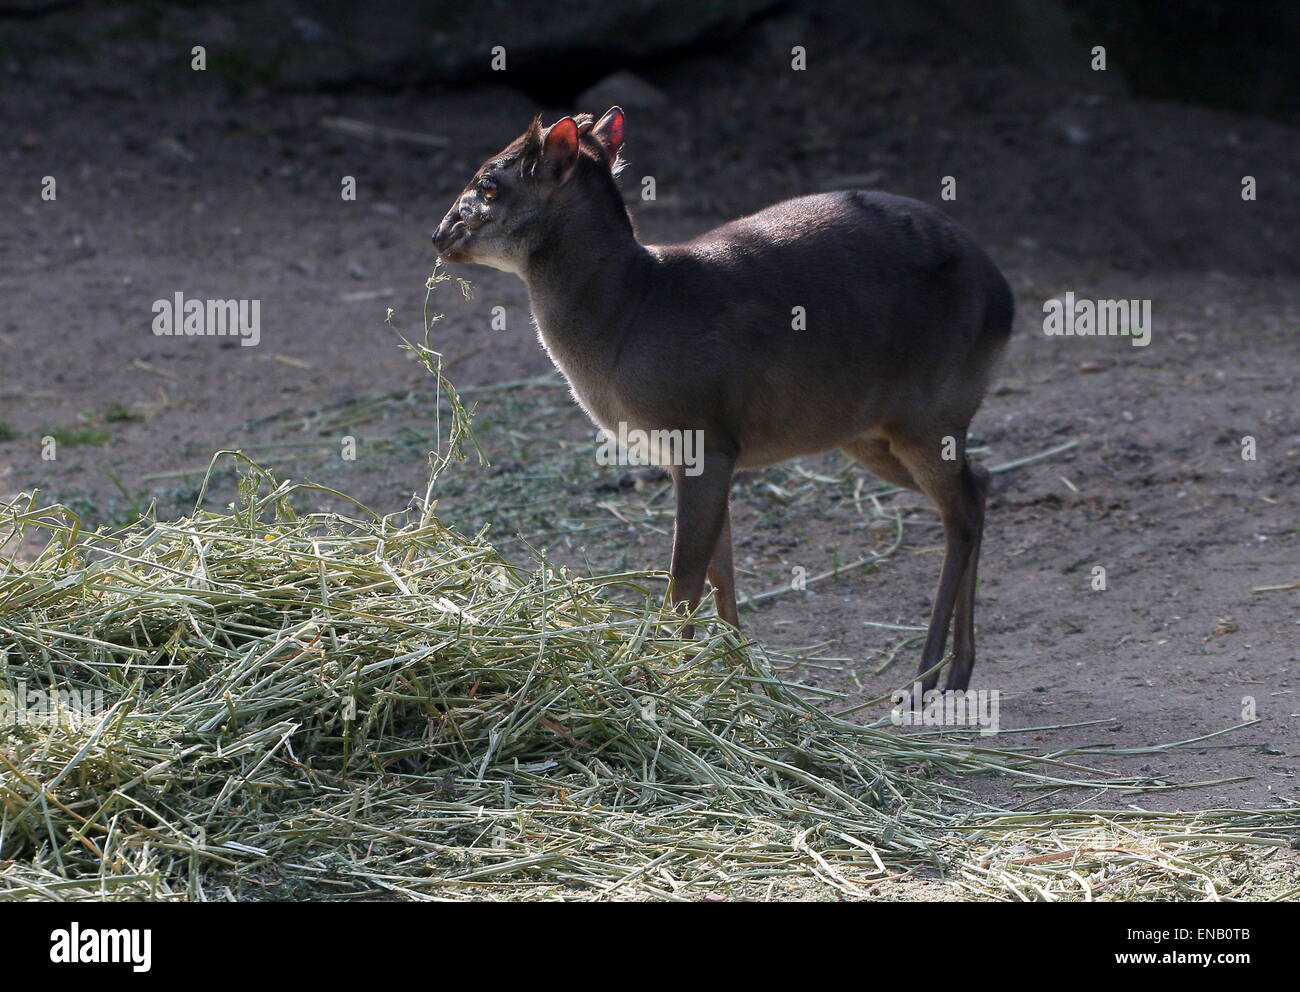 Mature Blue duiker antelope (Cephalophus monticola) feeding on hay in Burgers Zoo, Arnhem, The Netherlands Stock Photo